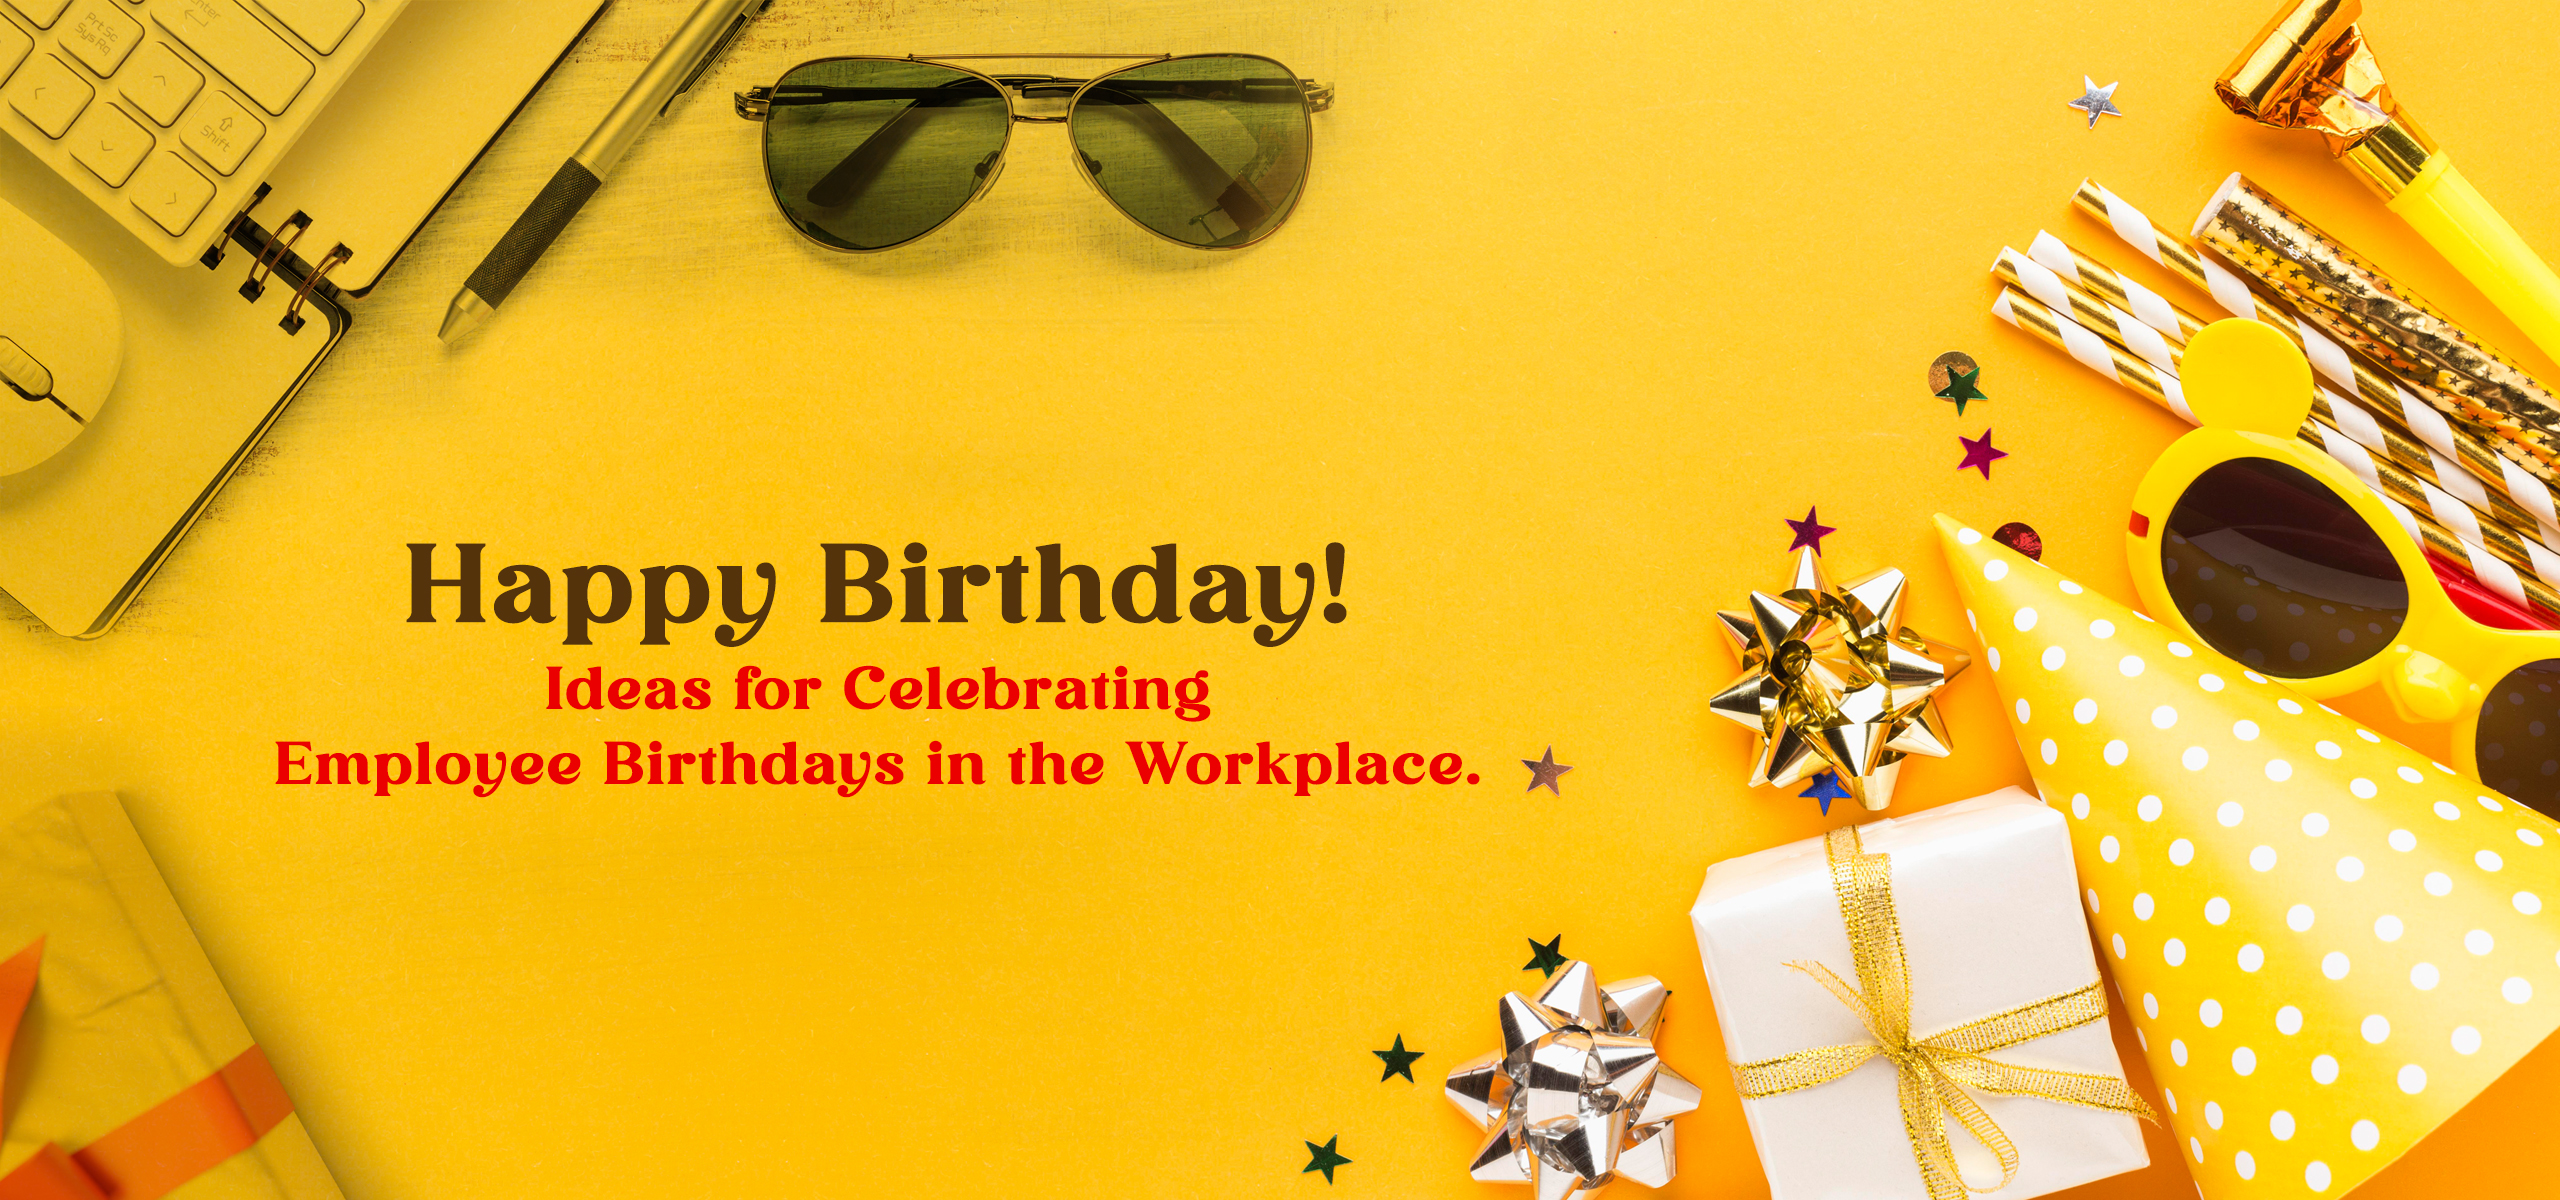 Happy Birthday! Ideas for Celebrating Employee Birthdays in the Workplace.